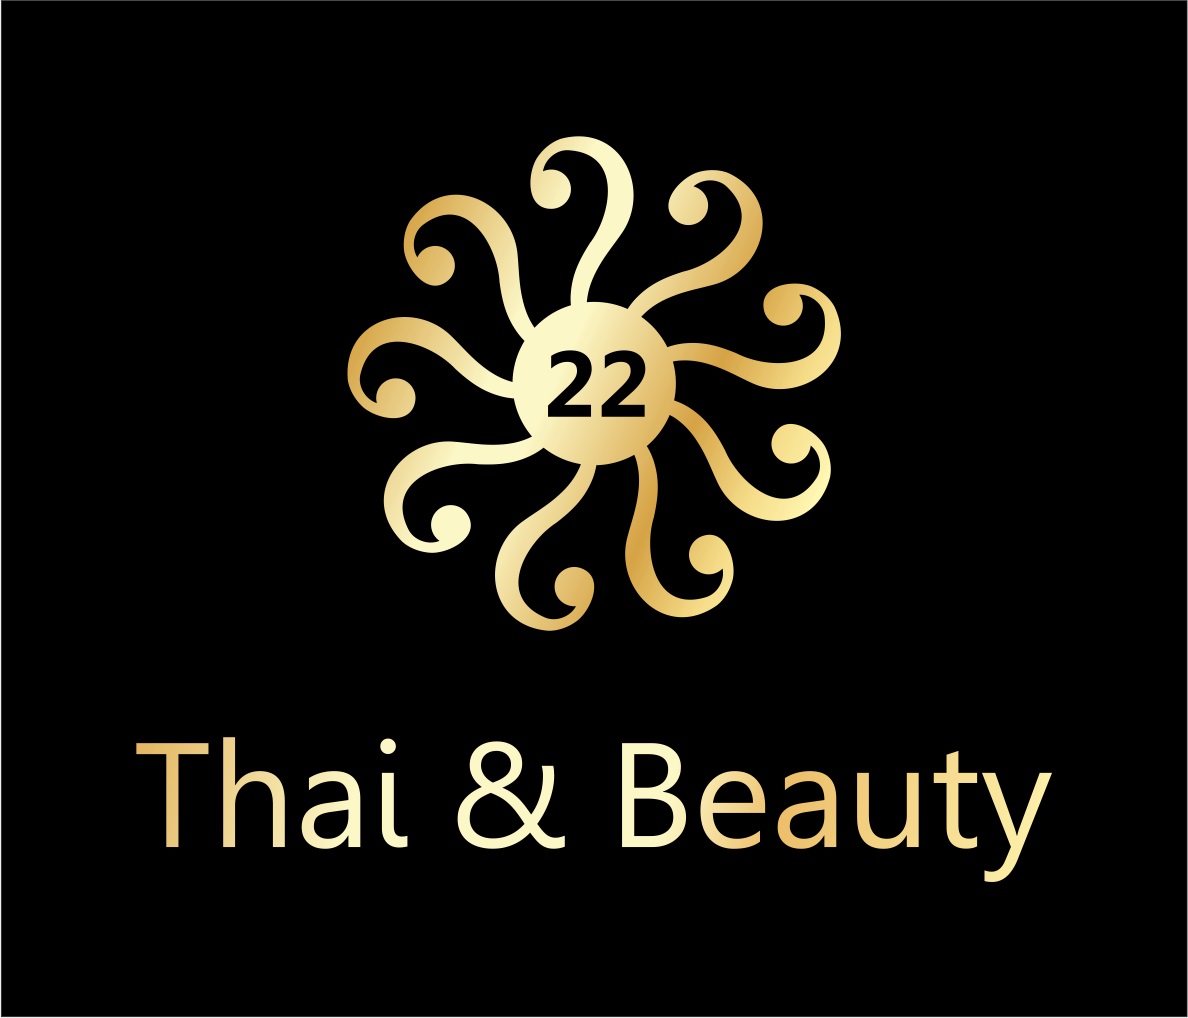 22 Thai & Beauty